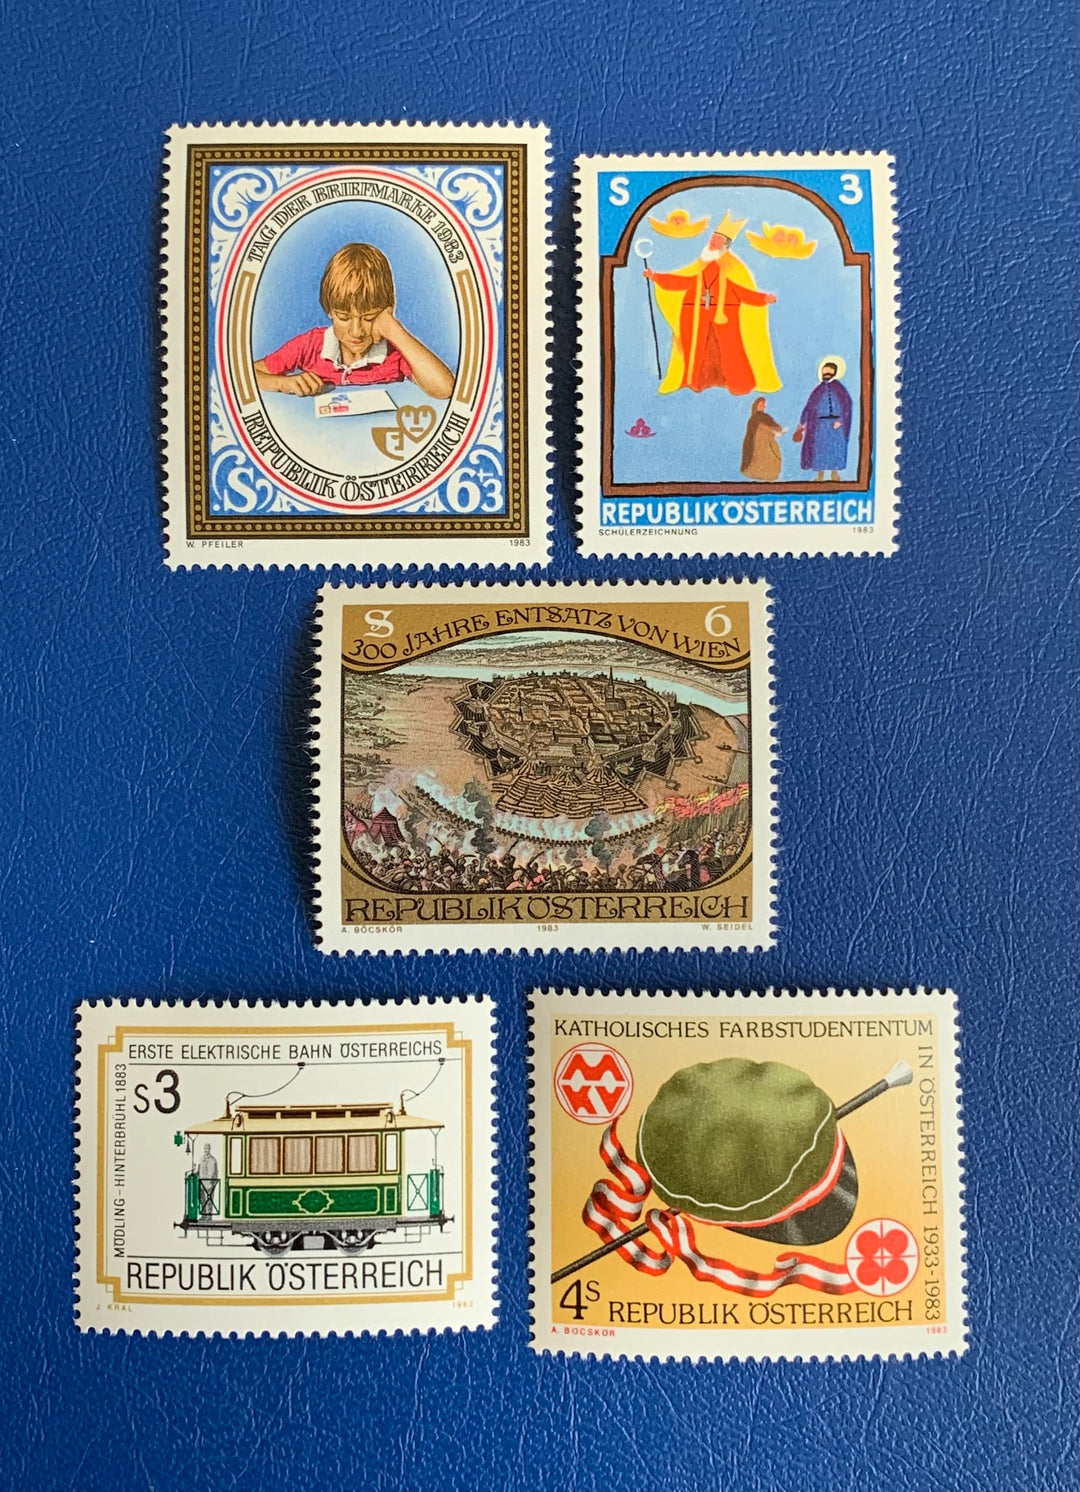 Austria - Original Vintage Postage Stamps - 1983 - Stamp Day, Altar Piece, Kaltenberg, Electric Railway. Colour Students